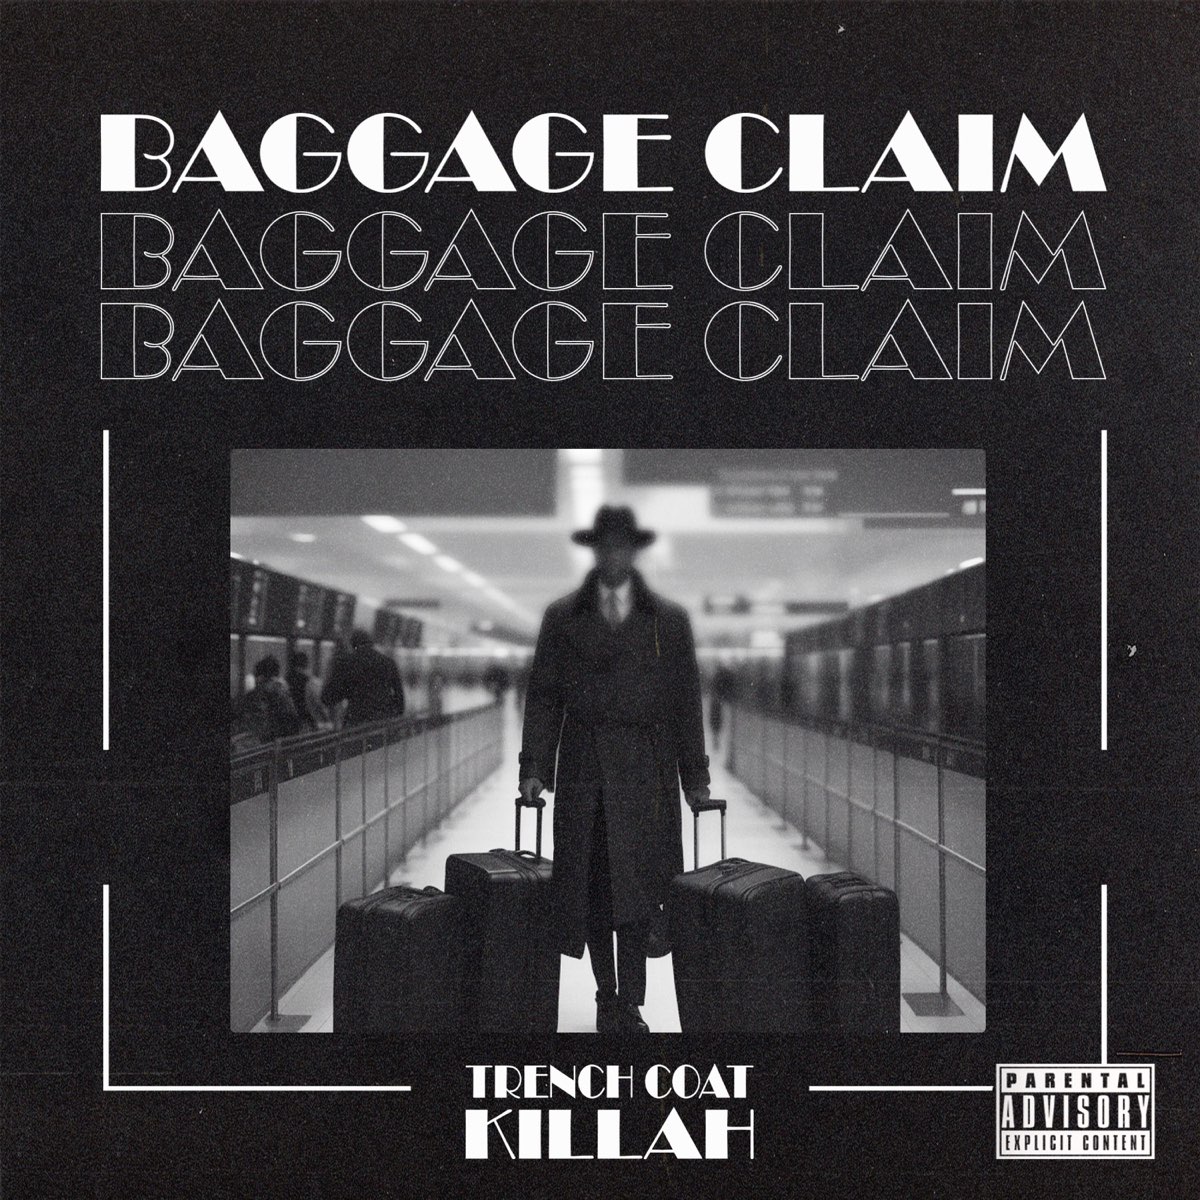 ‎Baggage Claim - Album by Trench Coat Killah - Apple Music